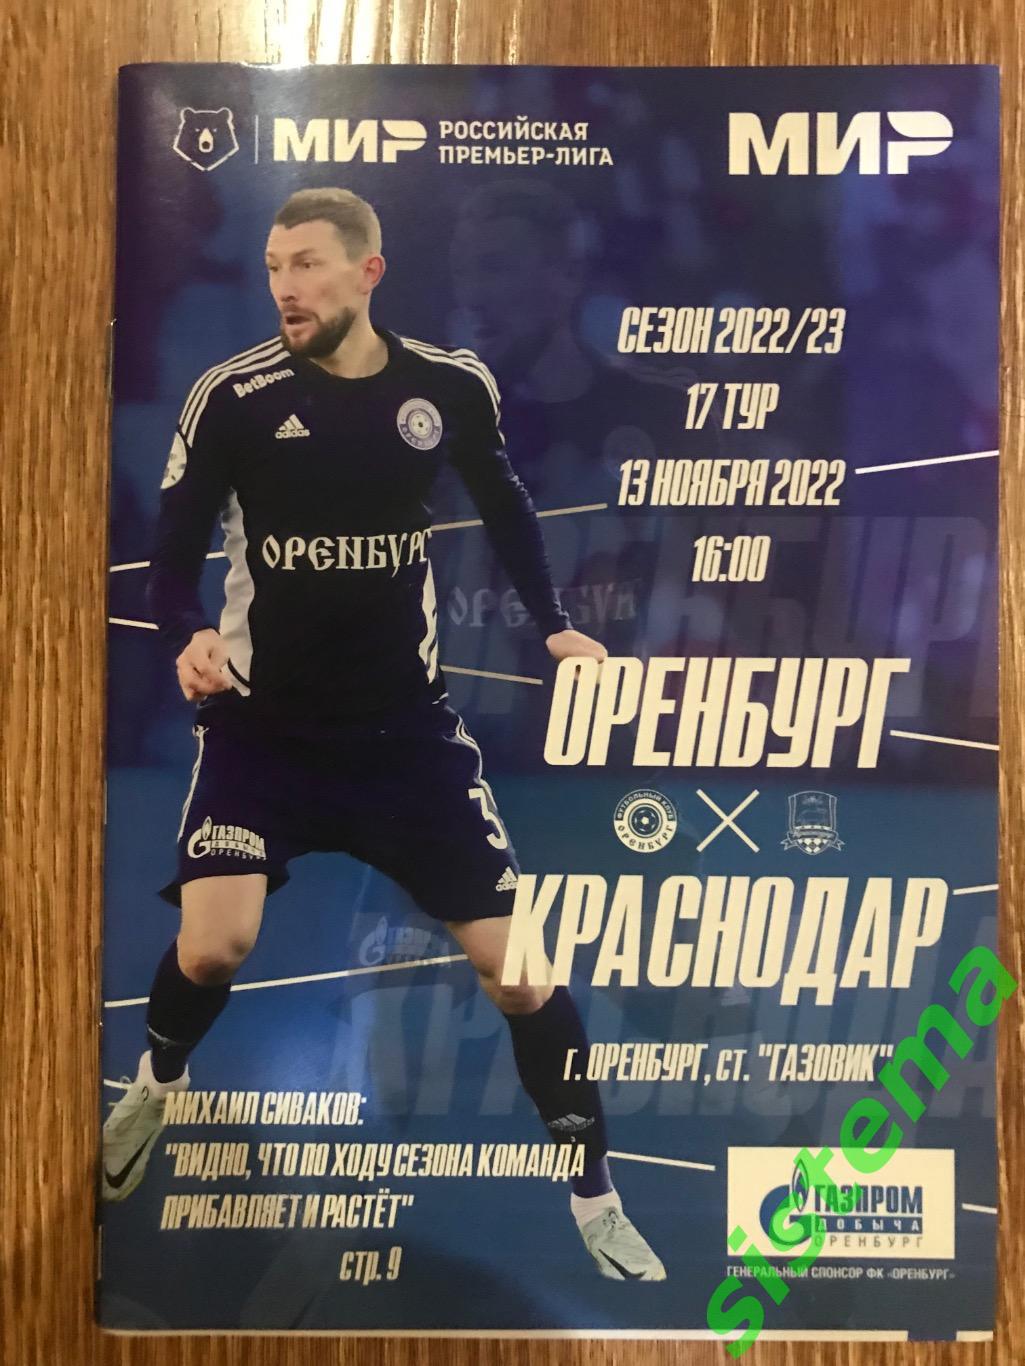 ФК Оренбург - ФК Краснодар 17 тур РПЛ сез. 2022/23 13.11.2022 г.